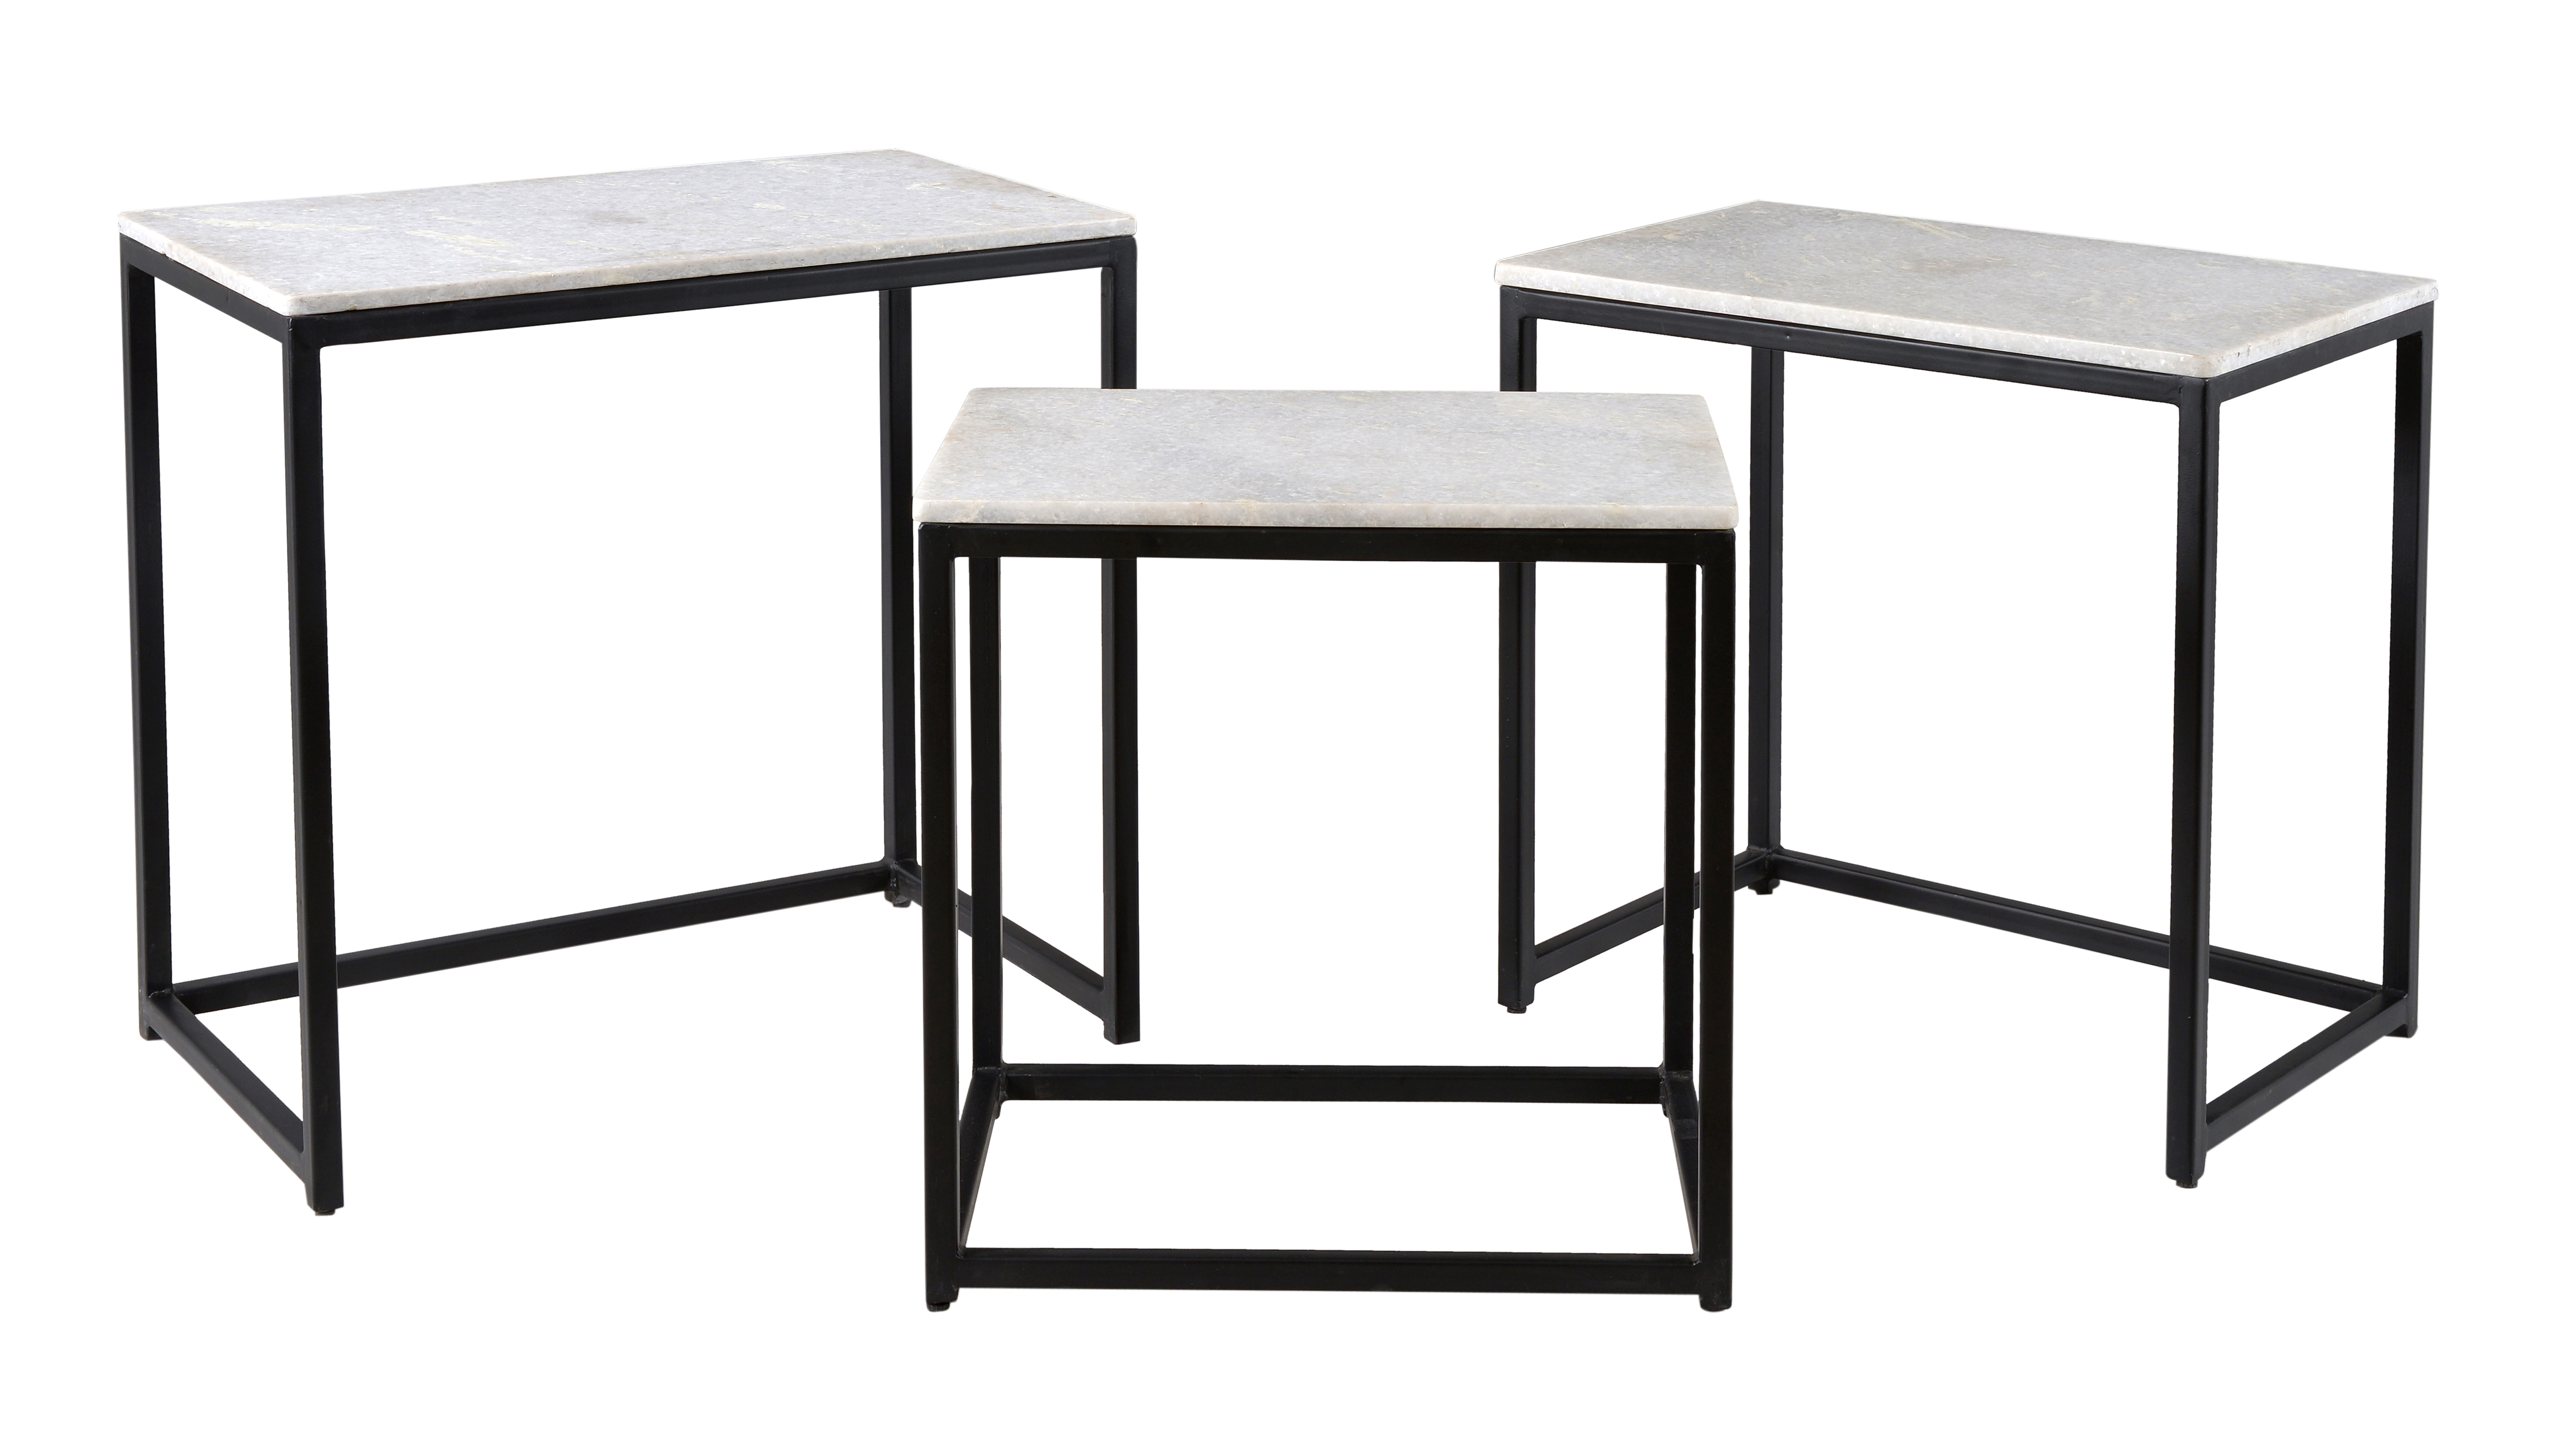 Set of Three Nesting Tables - Ponga Black - Image 2